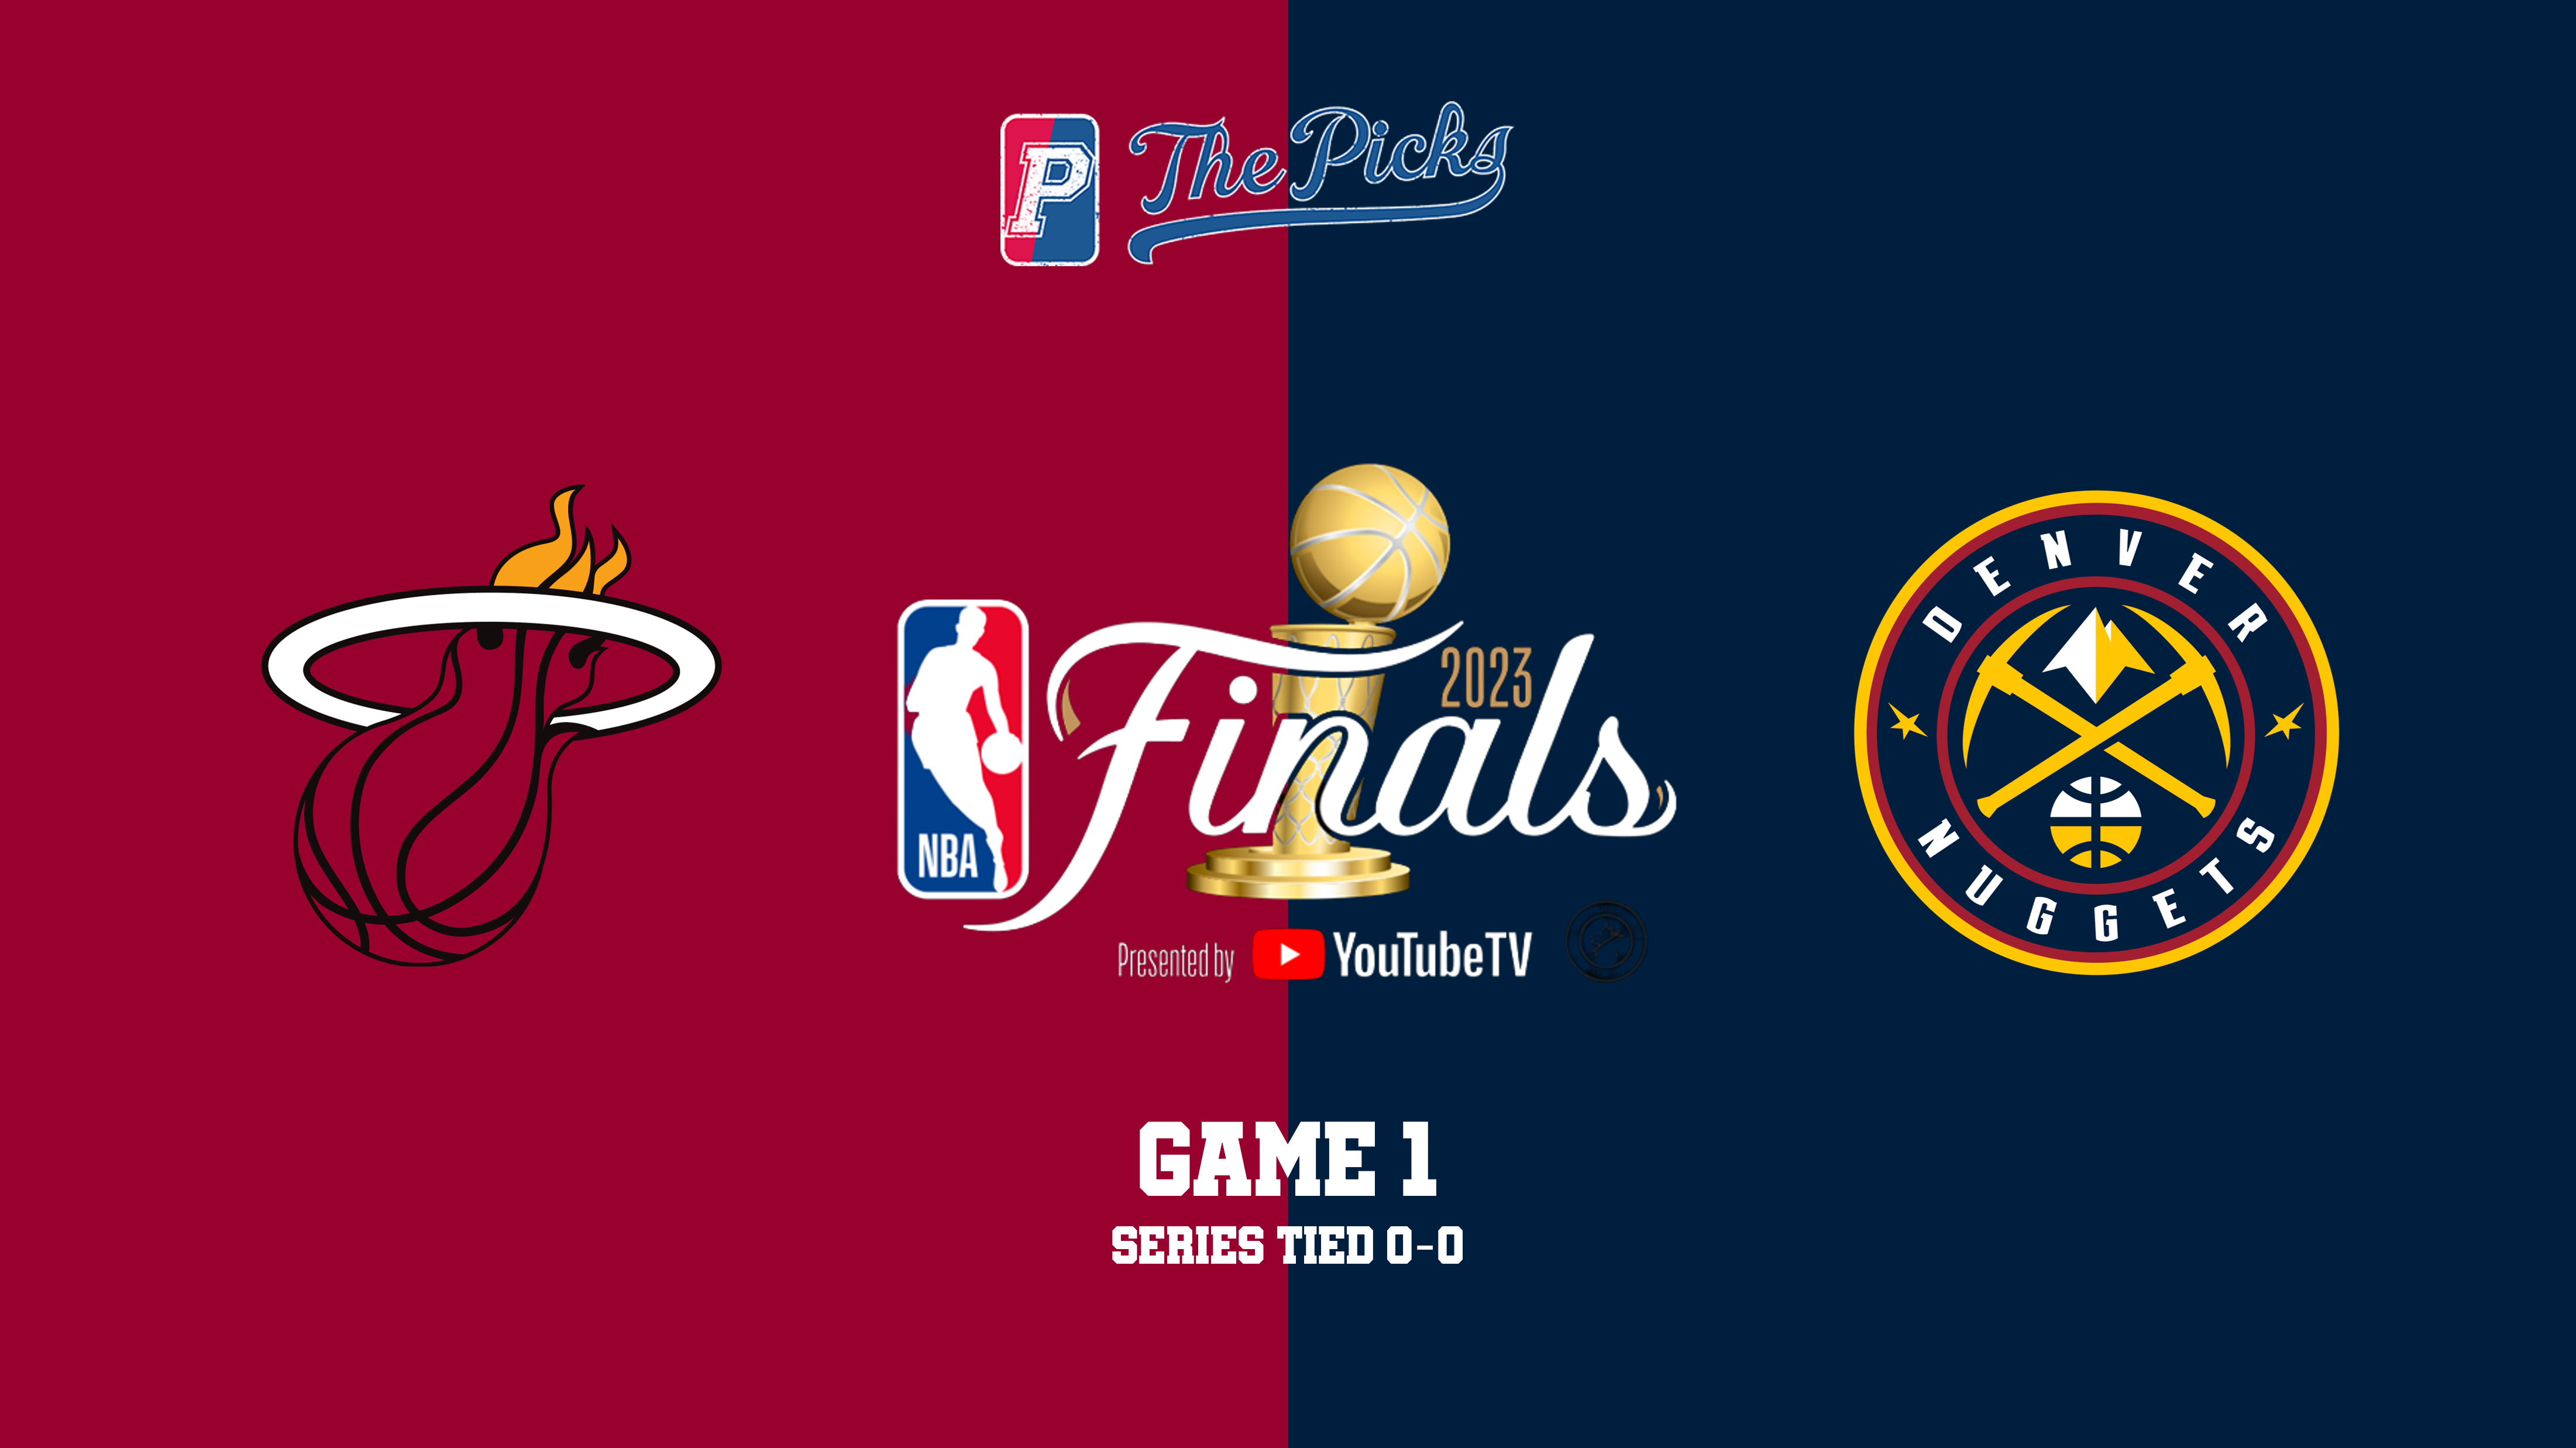 NBA Finals starting tonight